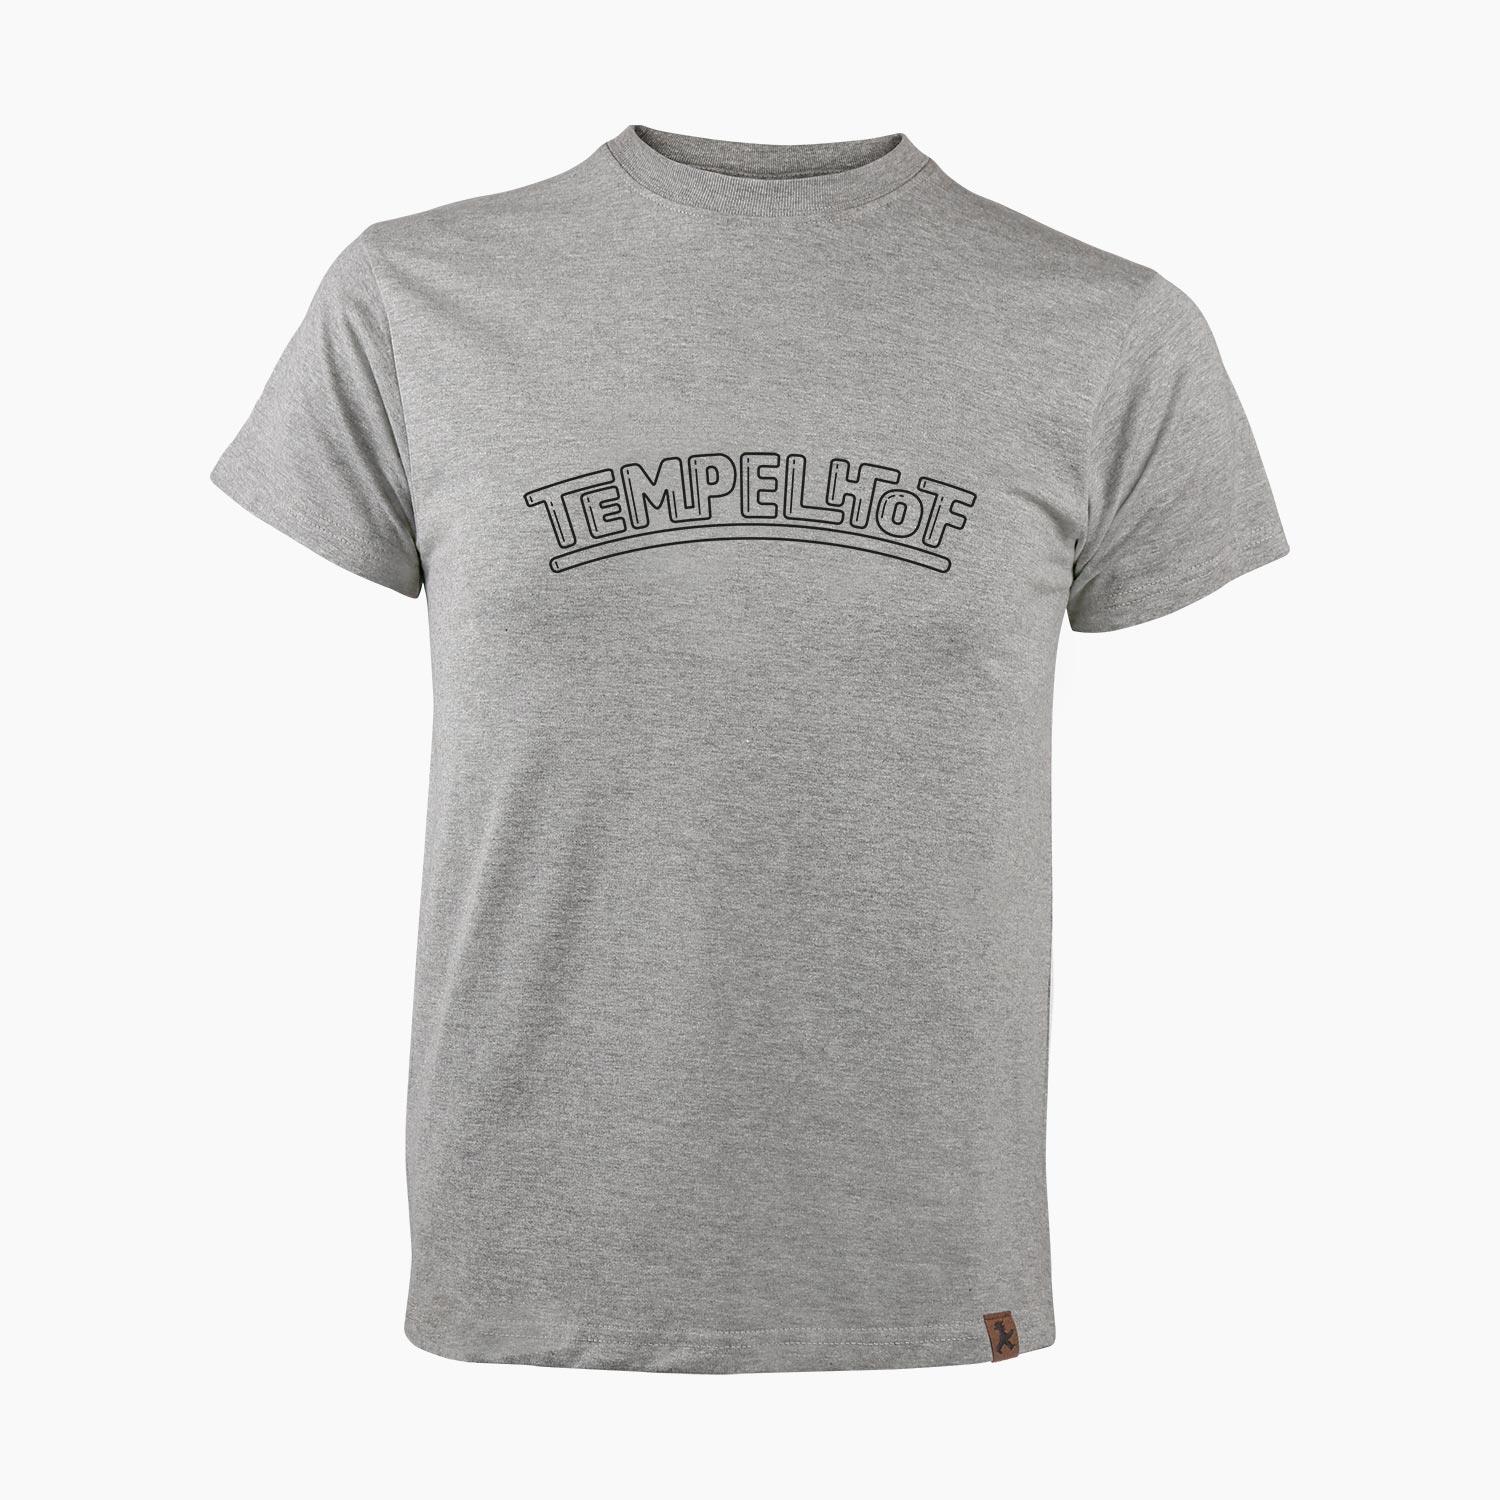 KIEZ KOLLEKTION TEMPELHOF XS/ Herren T-Shirt